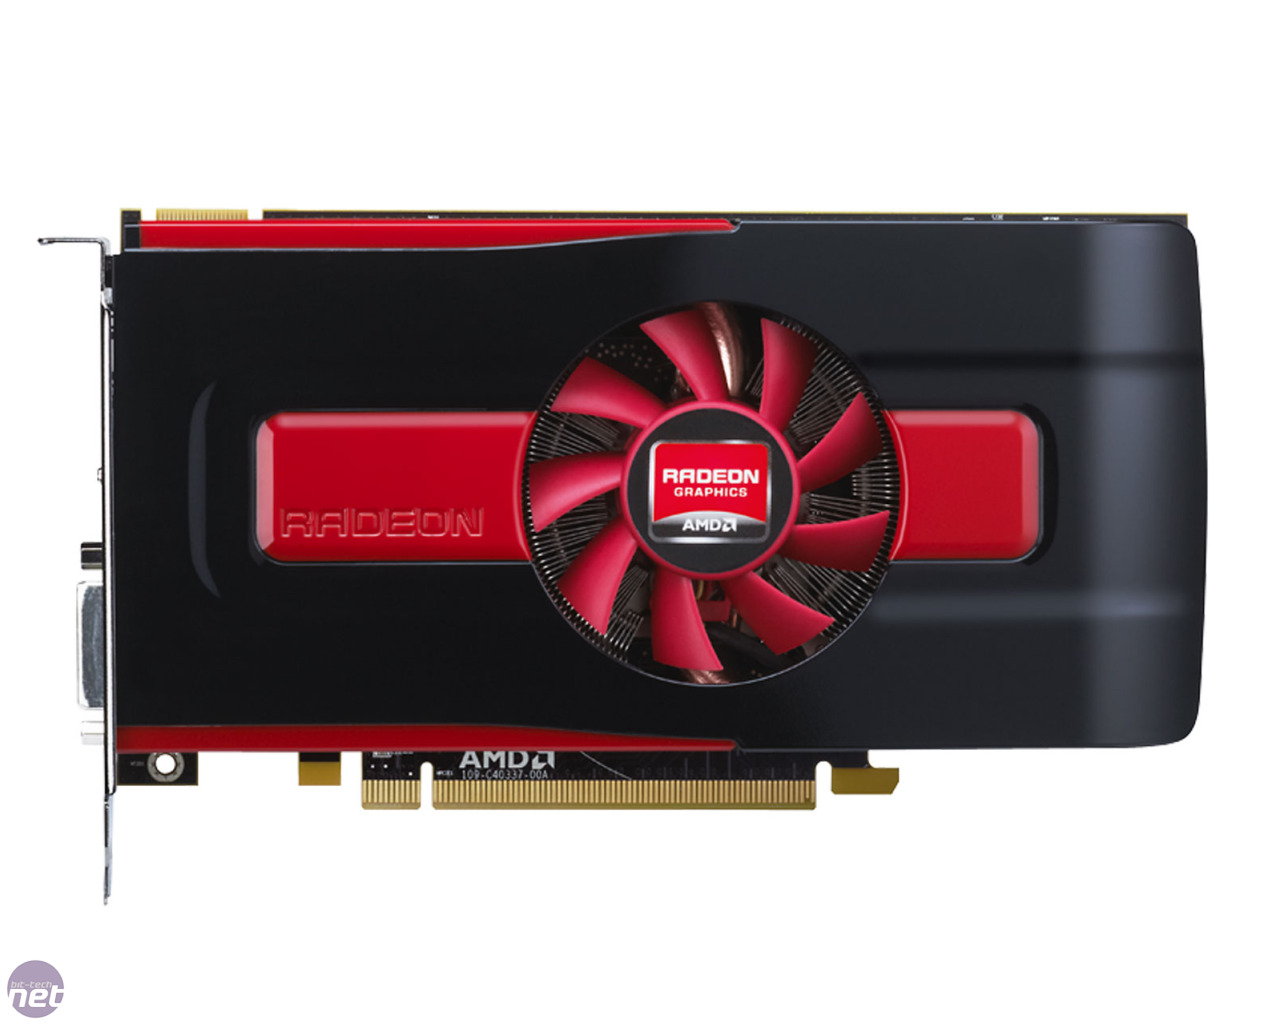 AMD Radeon HD 7850 2GB Review | bit 